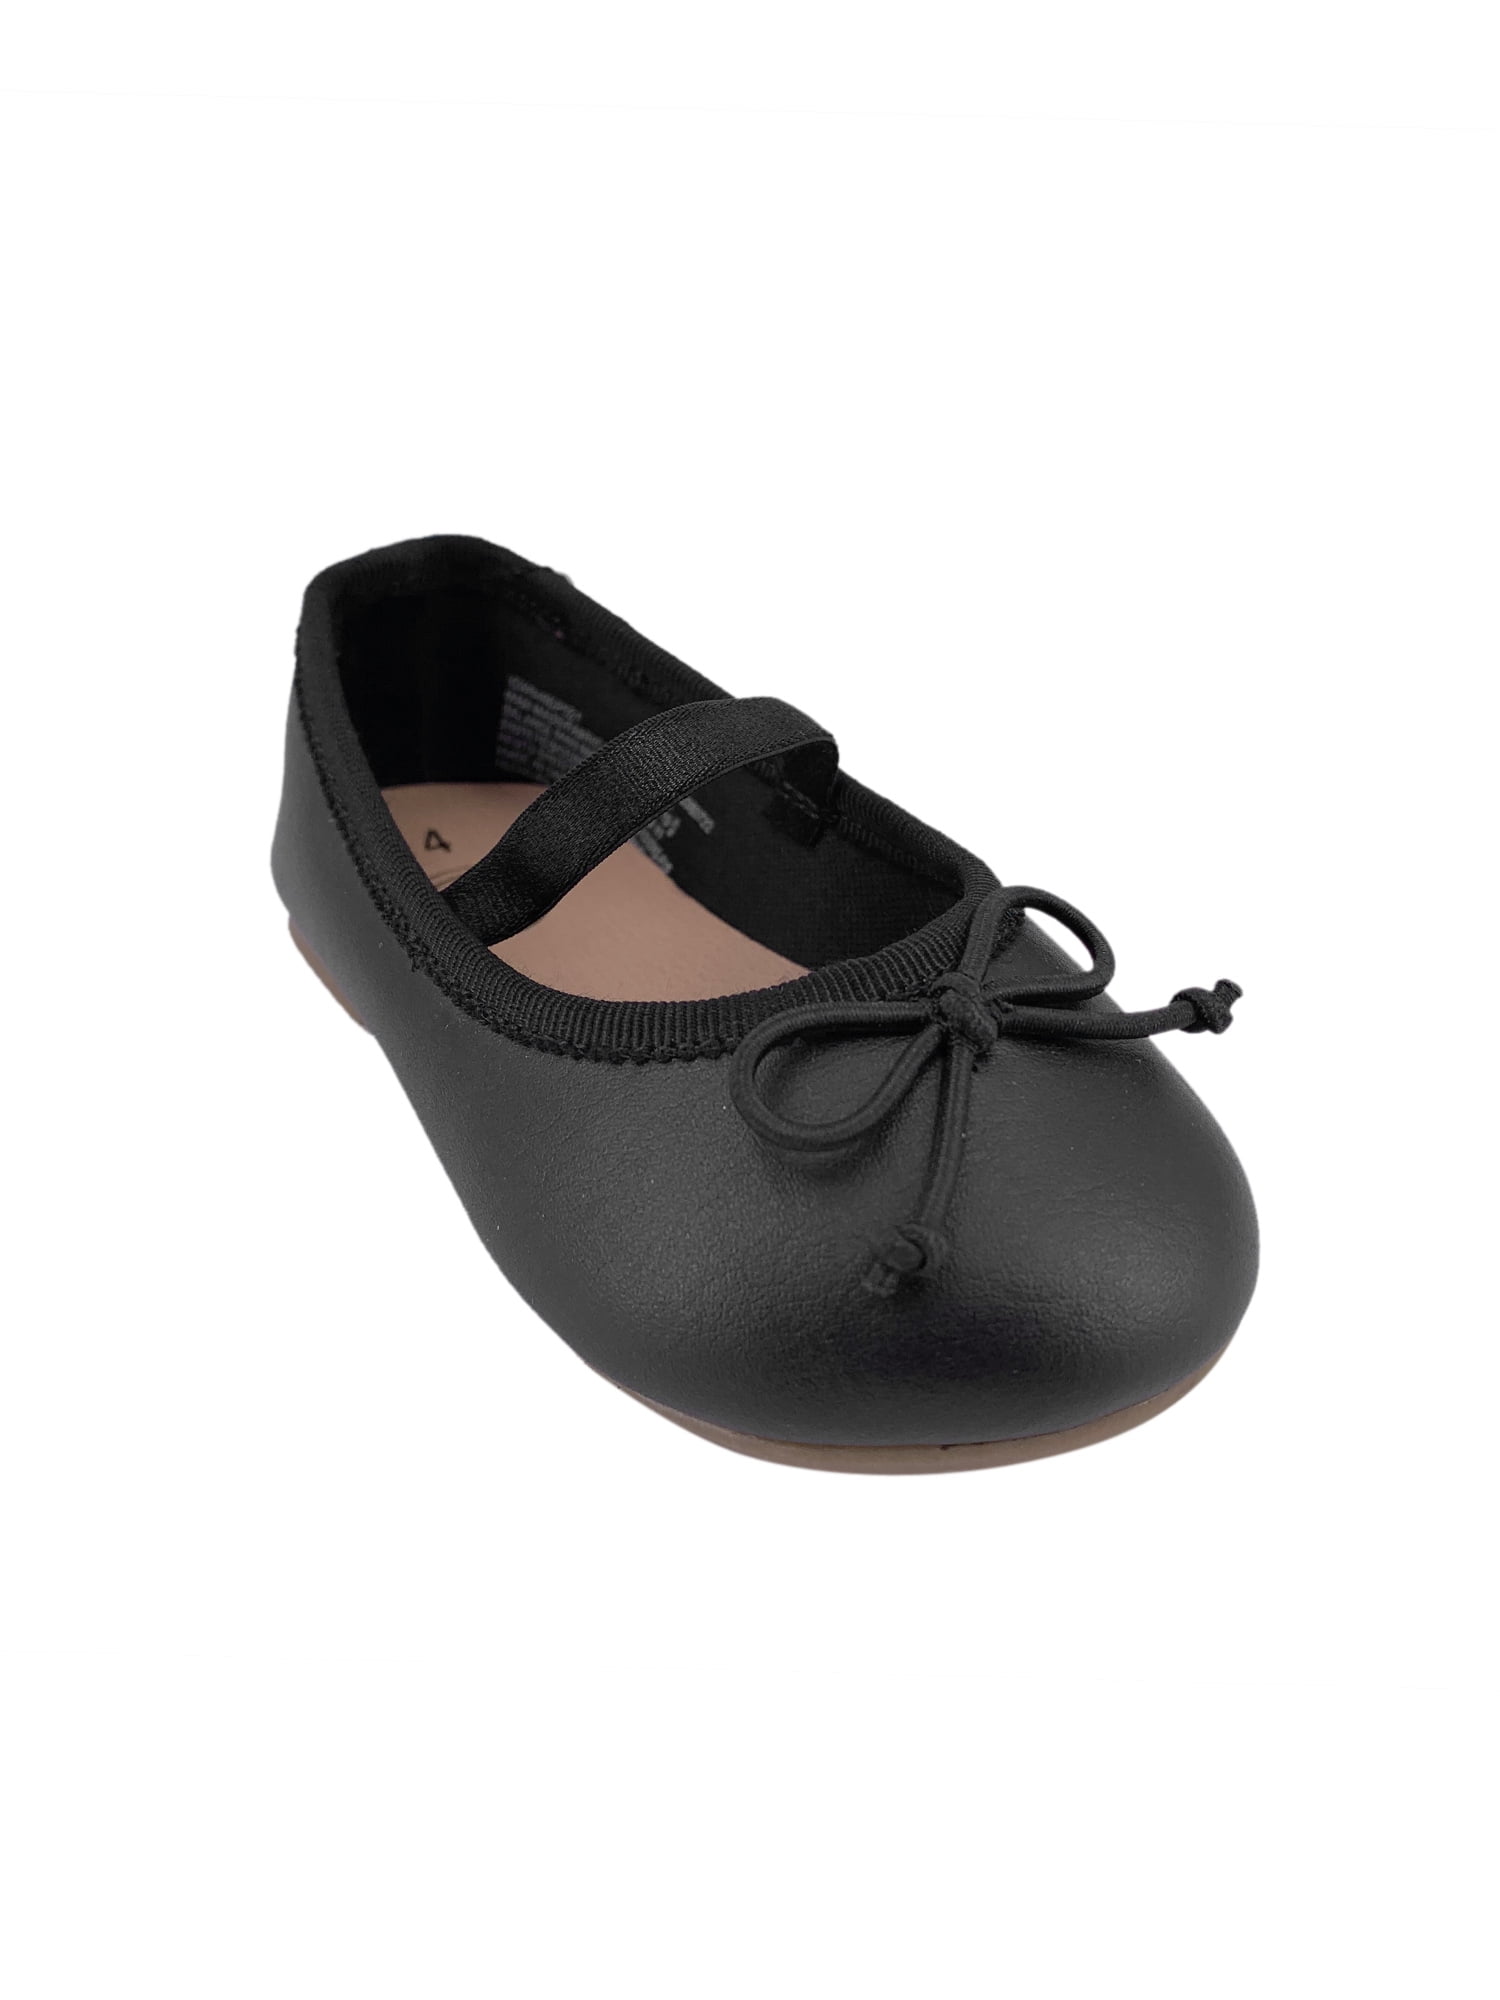 Toddler/Little Kid Femizee Girls Leather Bows Design Soft Round Toe Princess Dress Mary Jane Flat Shoes 